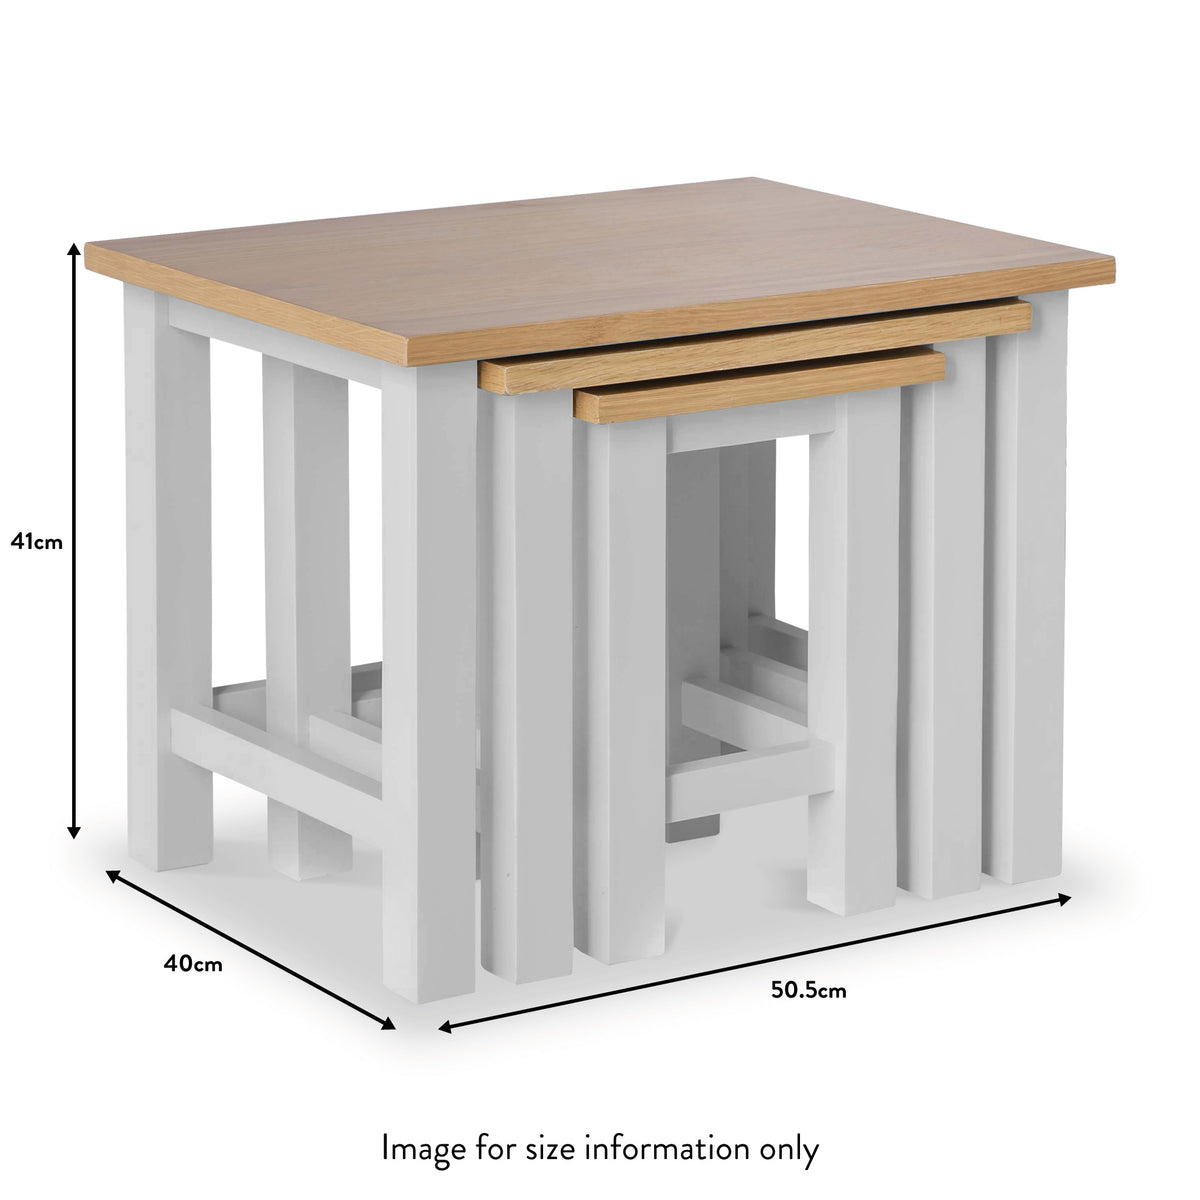 Farrow Grey Nest of Tables dimensions